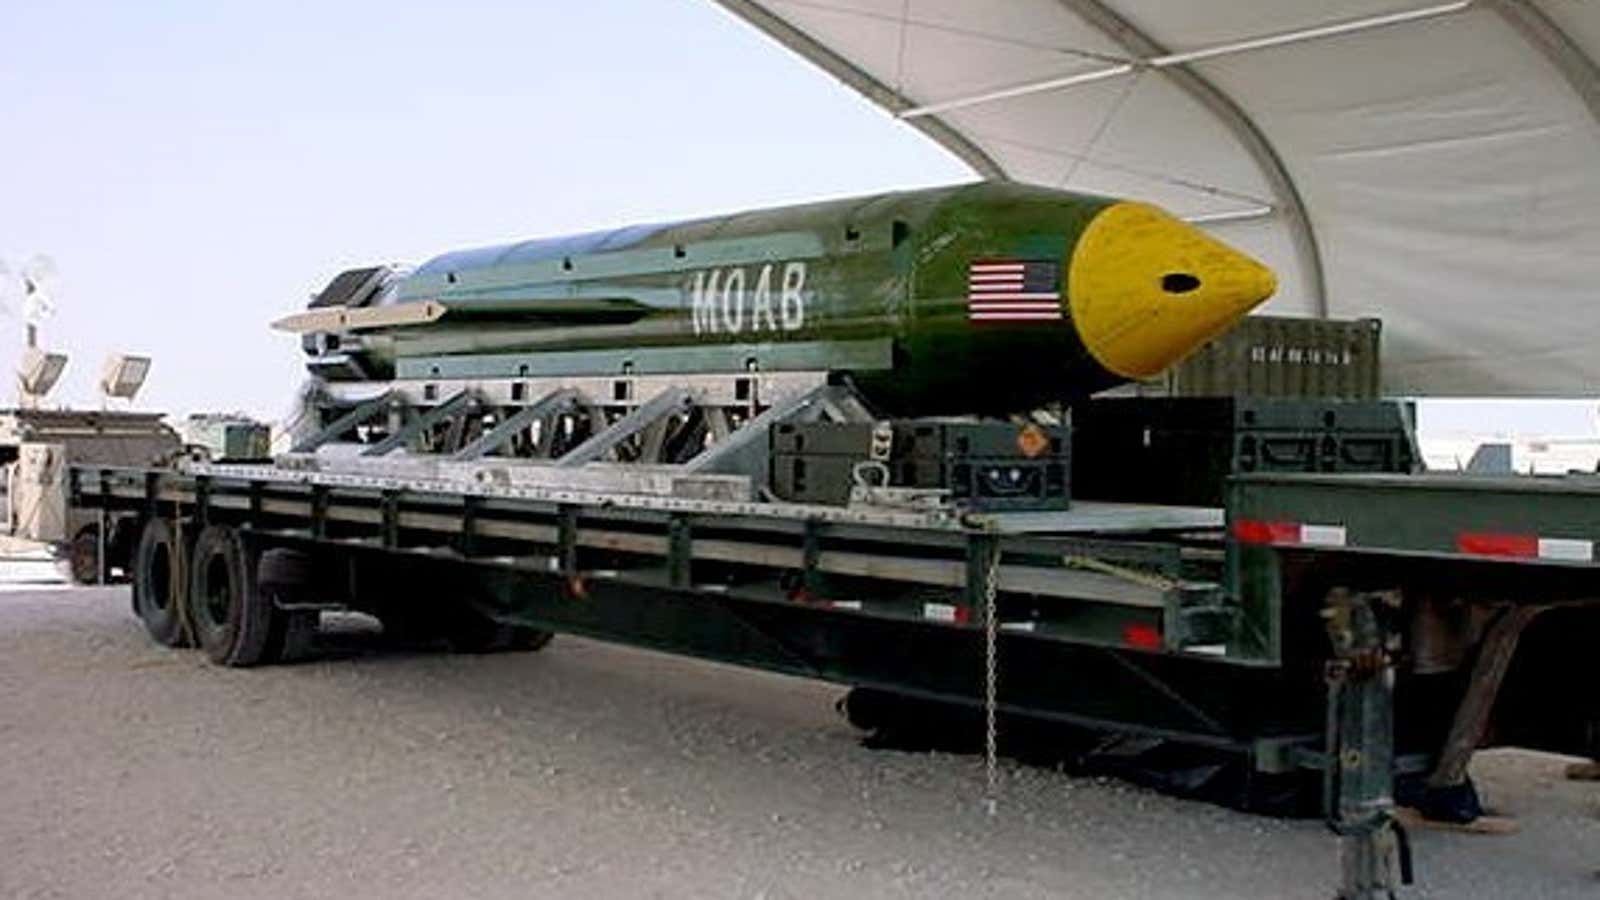 The Massive Ordnance Air Blast (MOAB) bomb